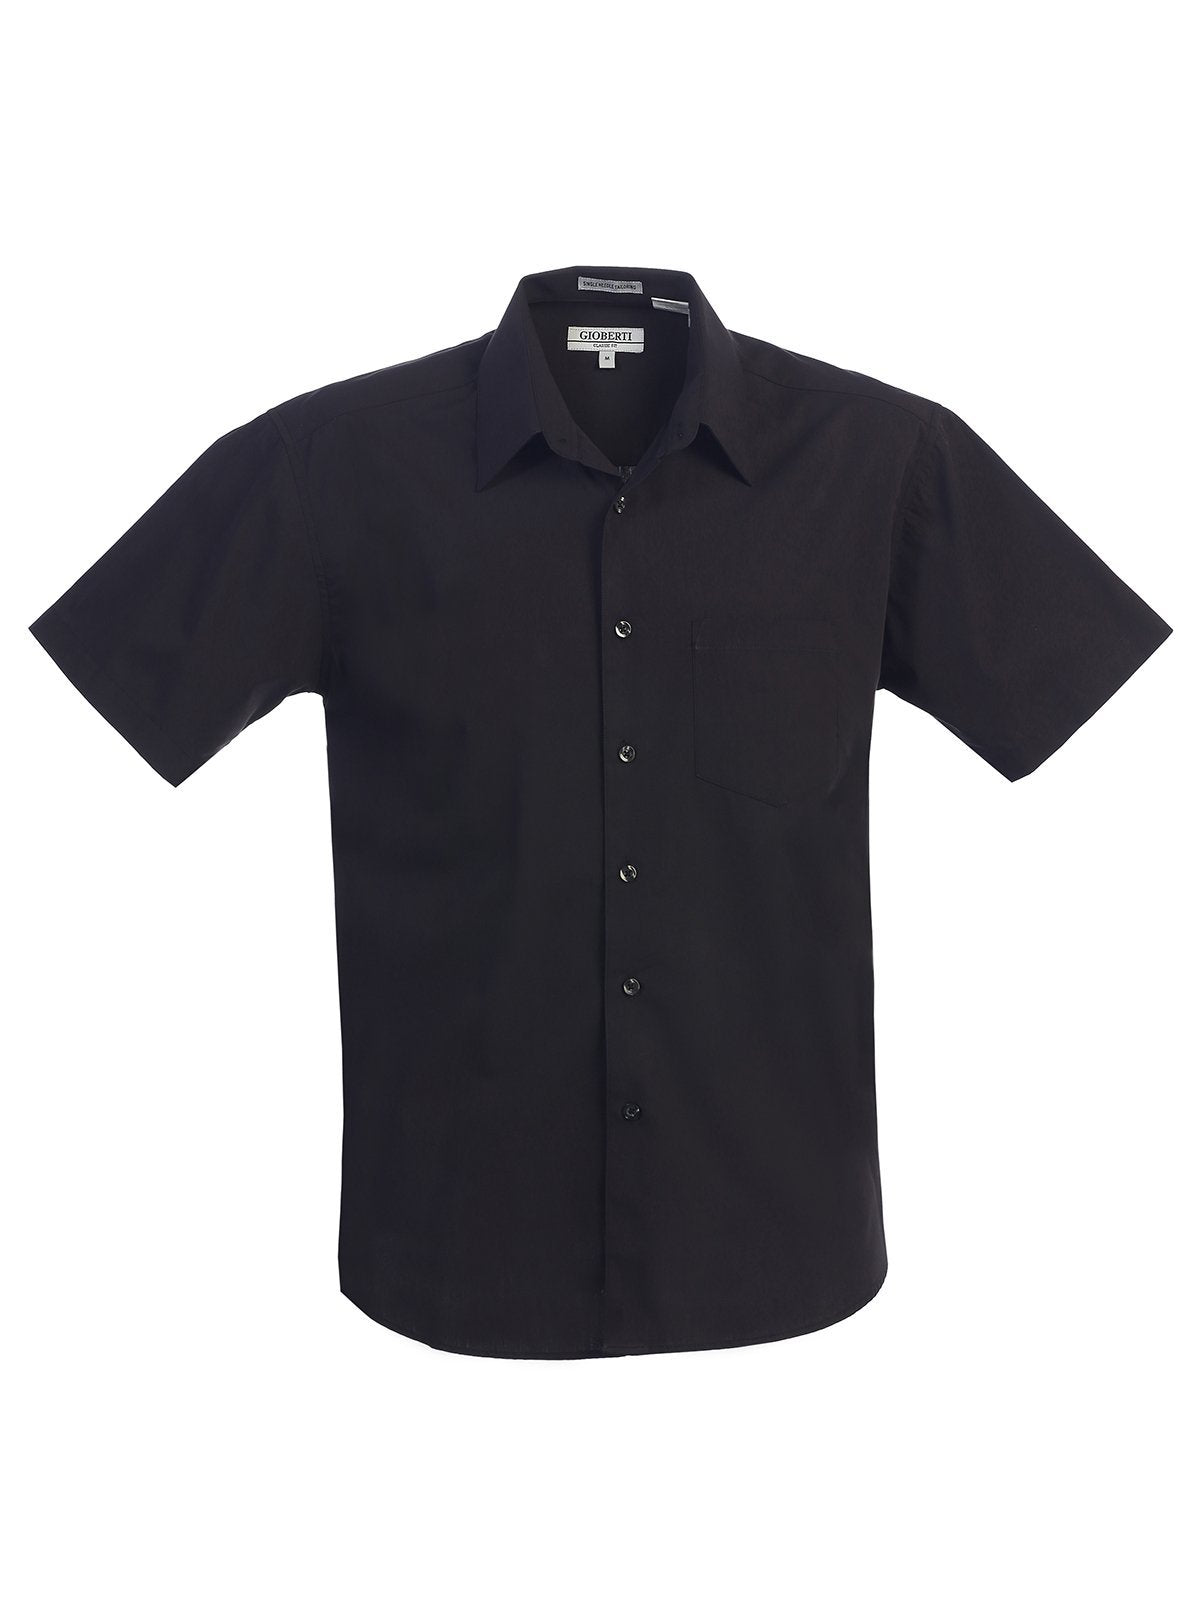 Boys Short Sleeve Dress Shirt GB-DSS 8-18